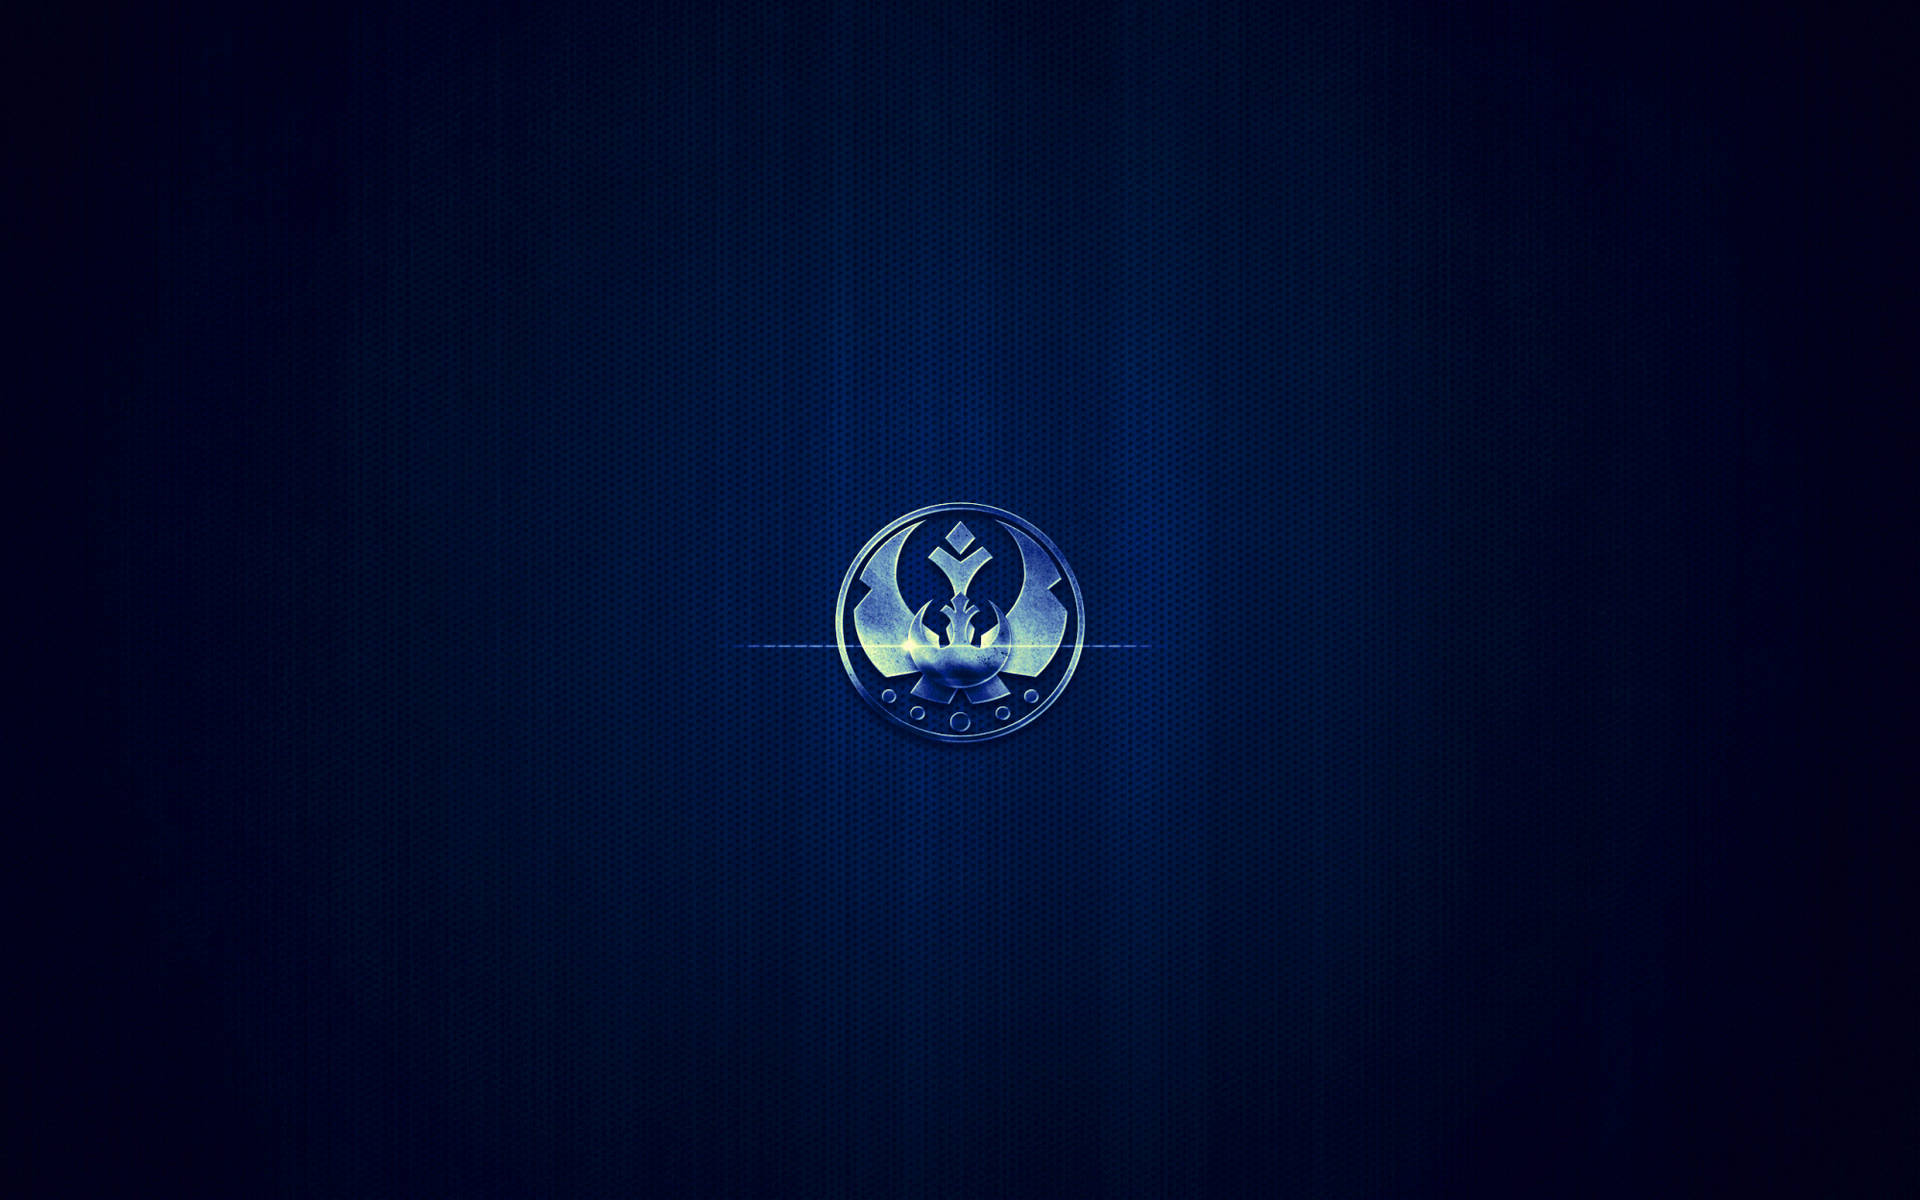 Cool Star Wars Blue Symbol Wallpaper